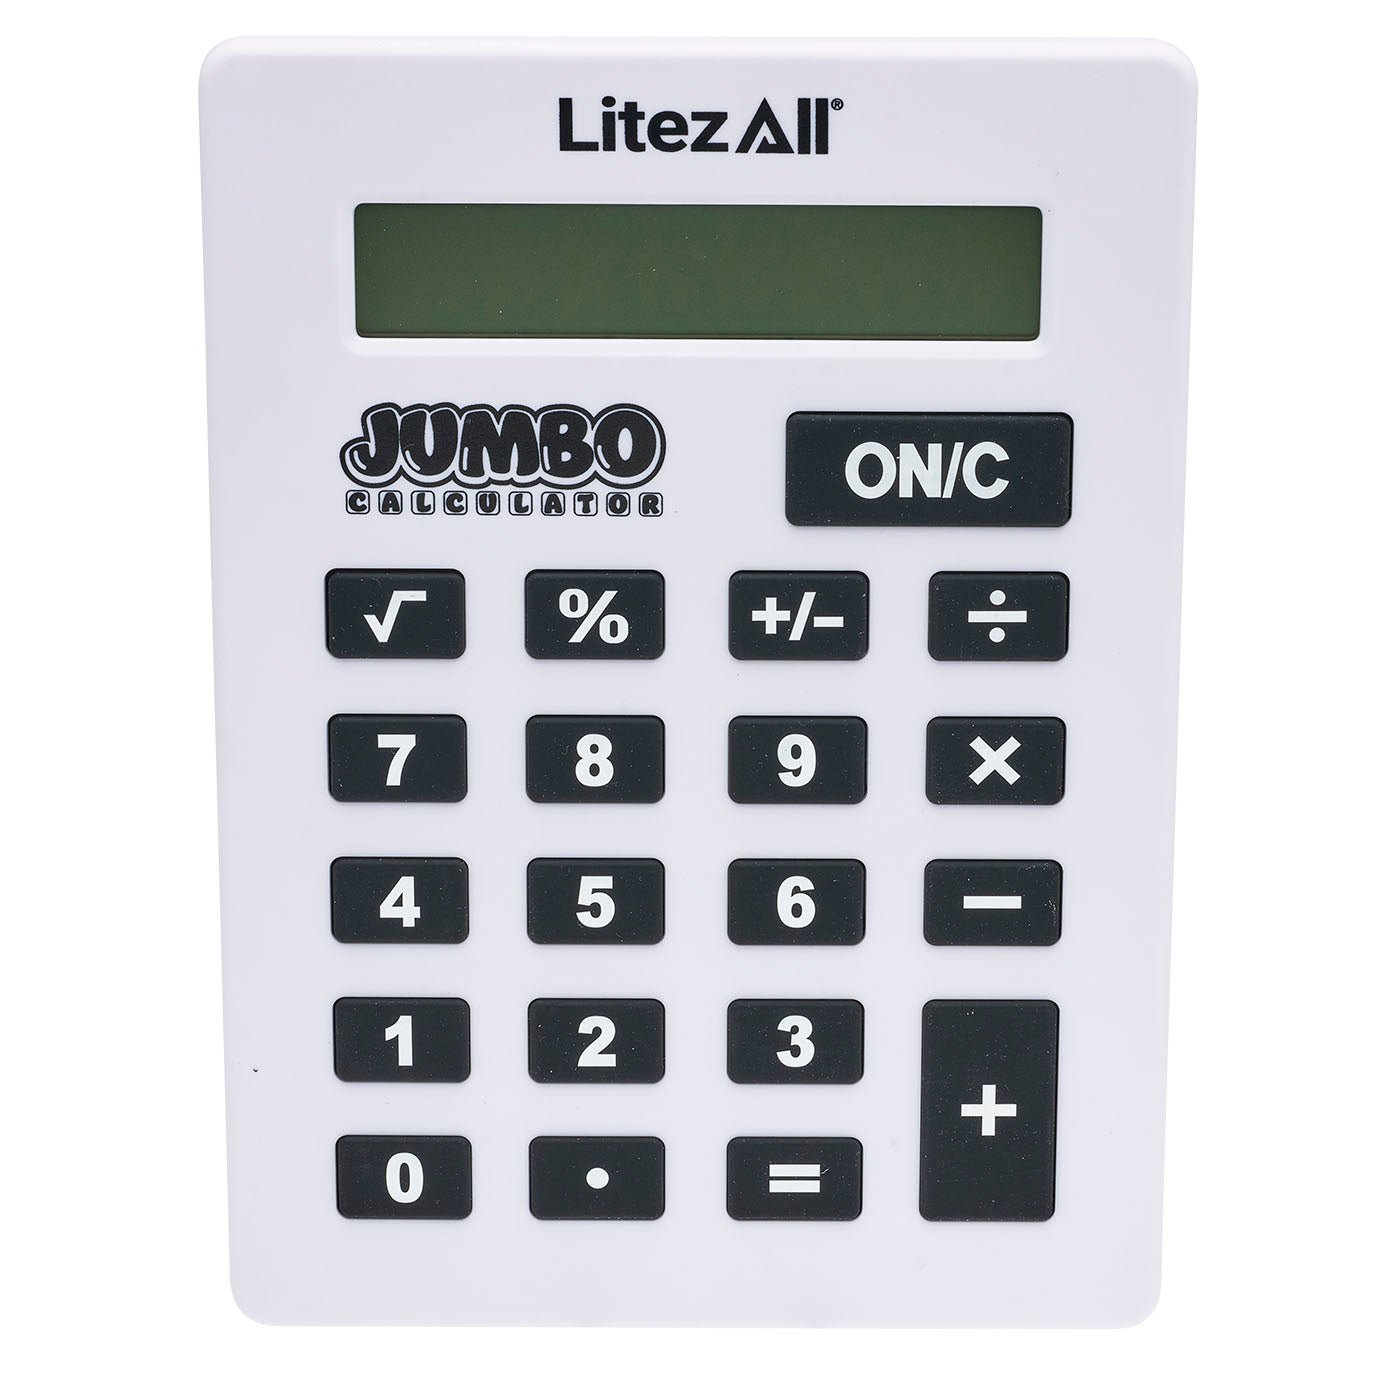 LitezAll Jumbo Calculator - LitezAll - Novelties - 20